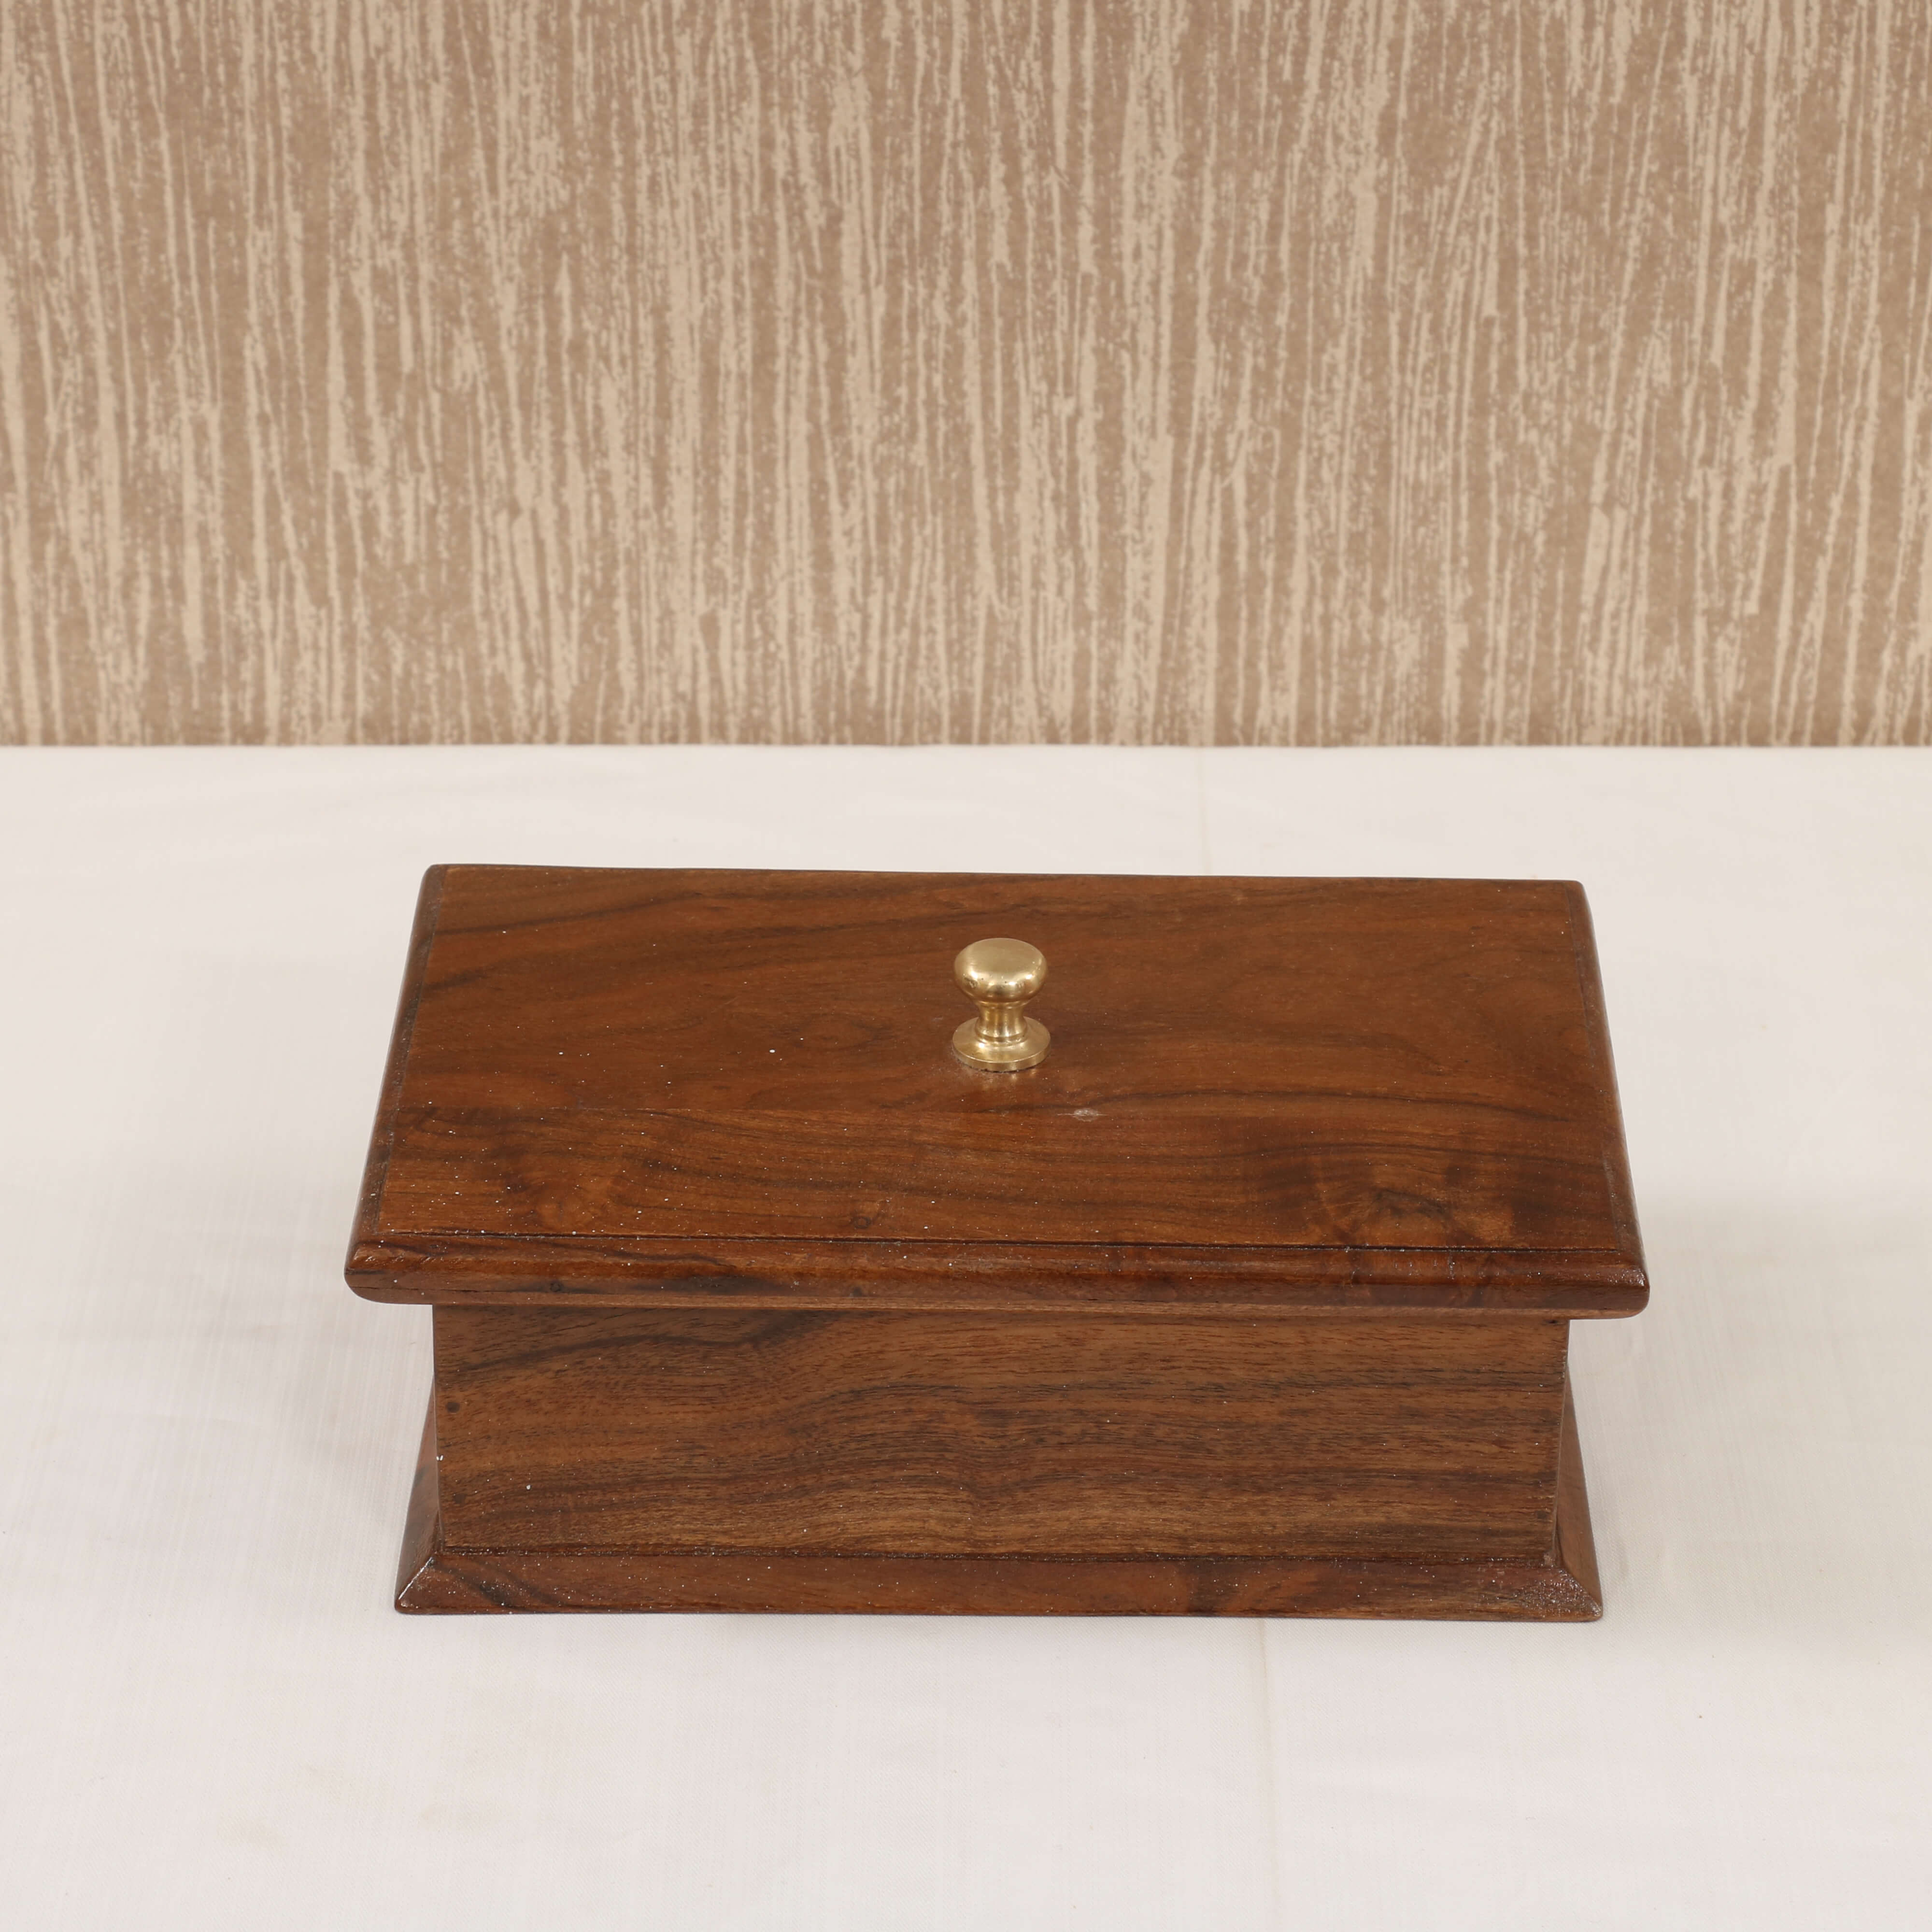 Charming Wooden Storage Box Wooden Box